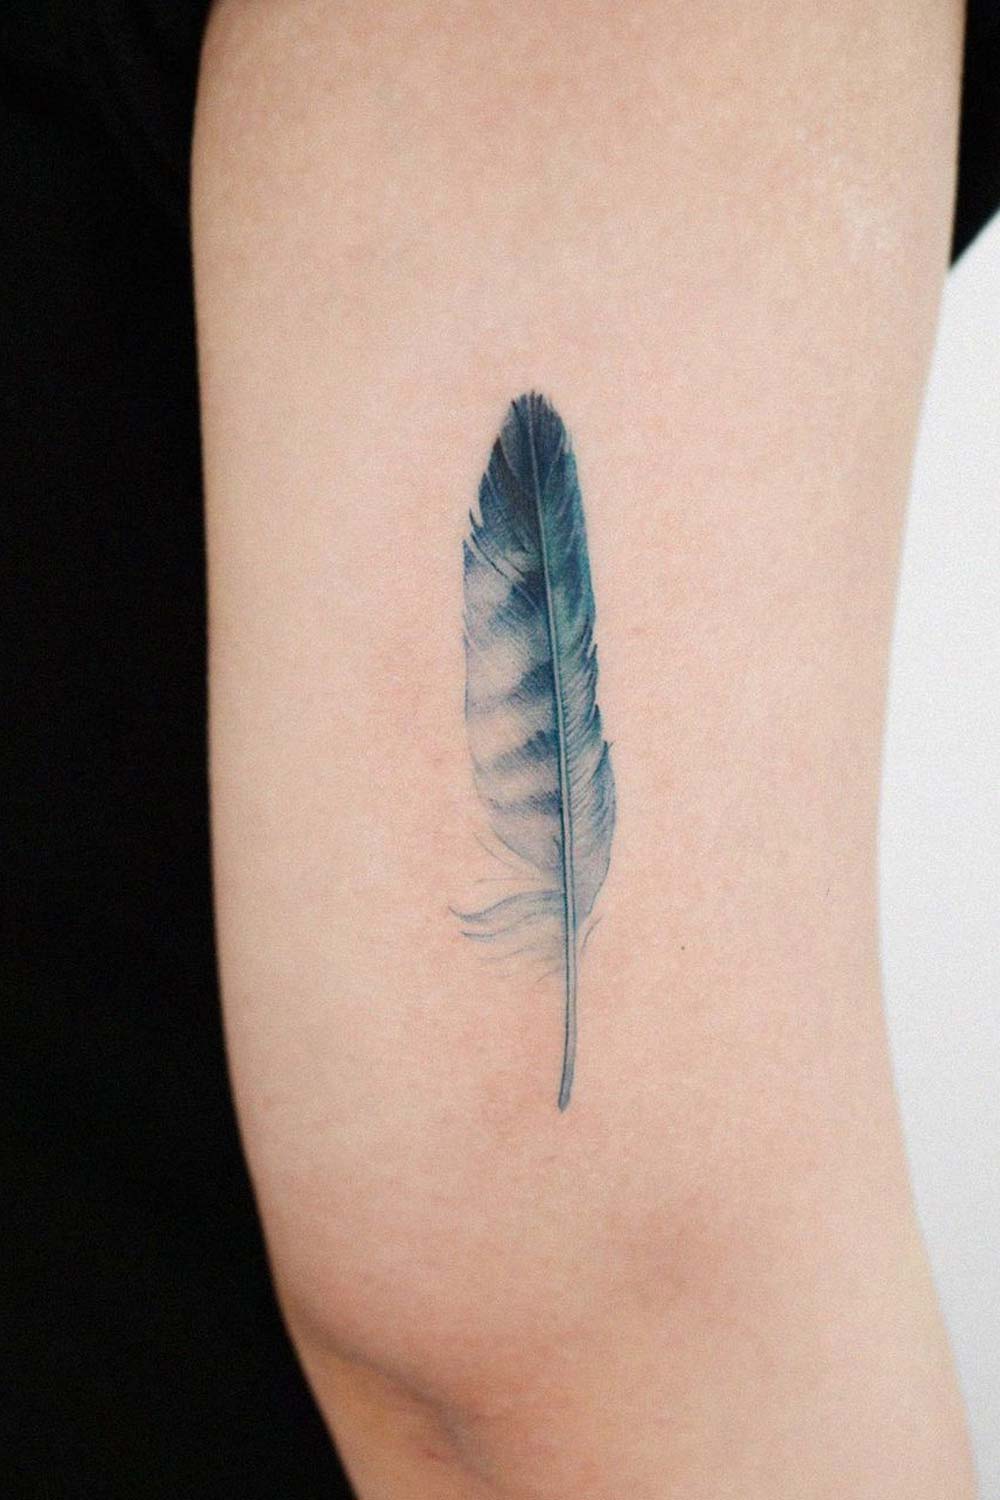 Minimalis Feather Tattoo Design for Arm